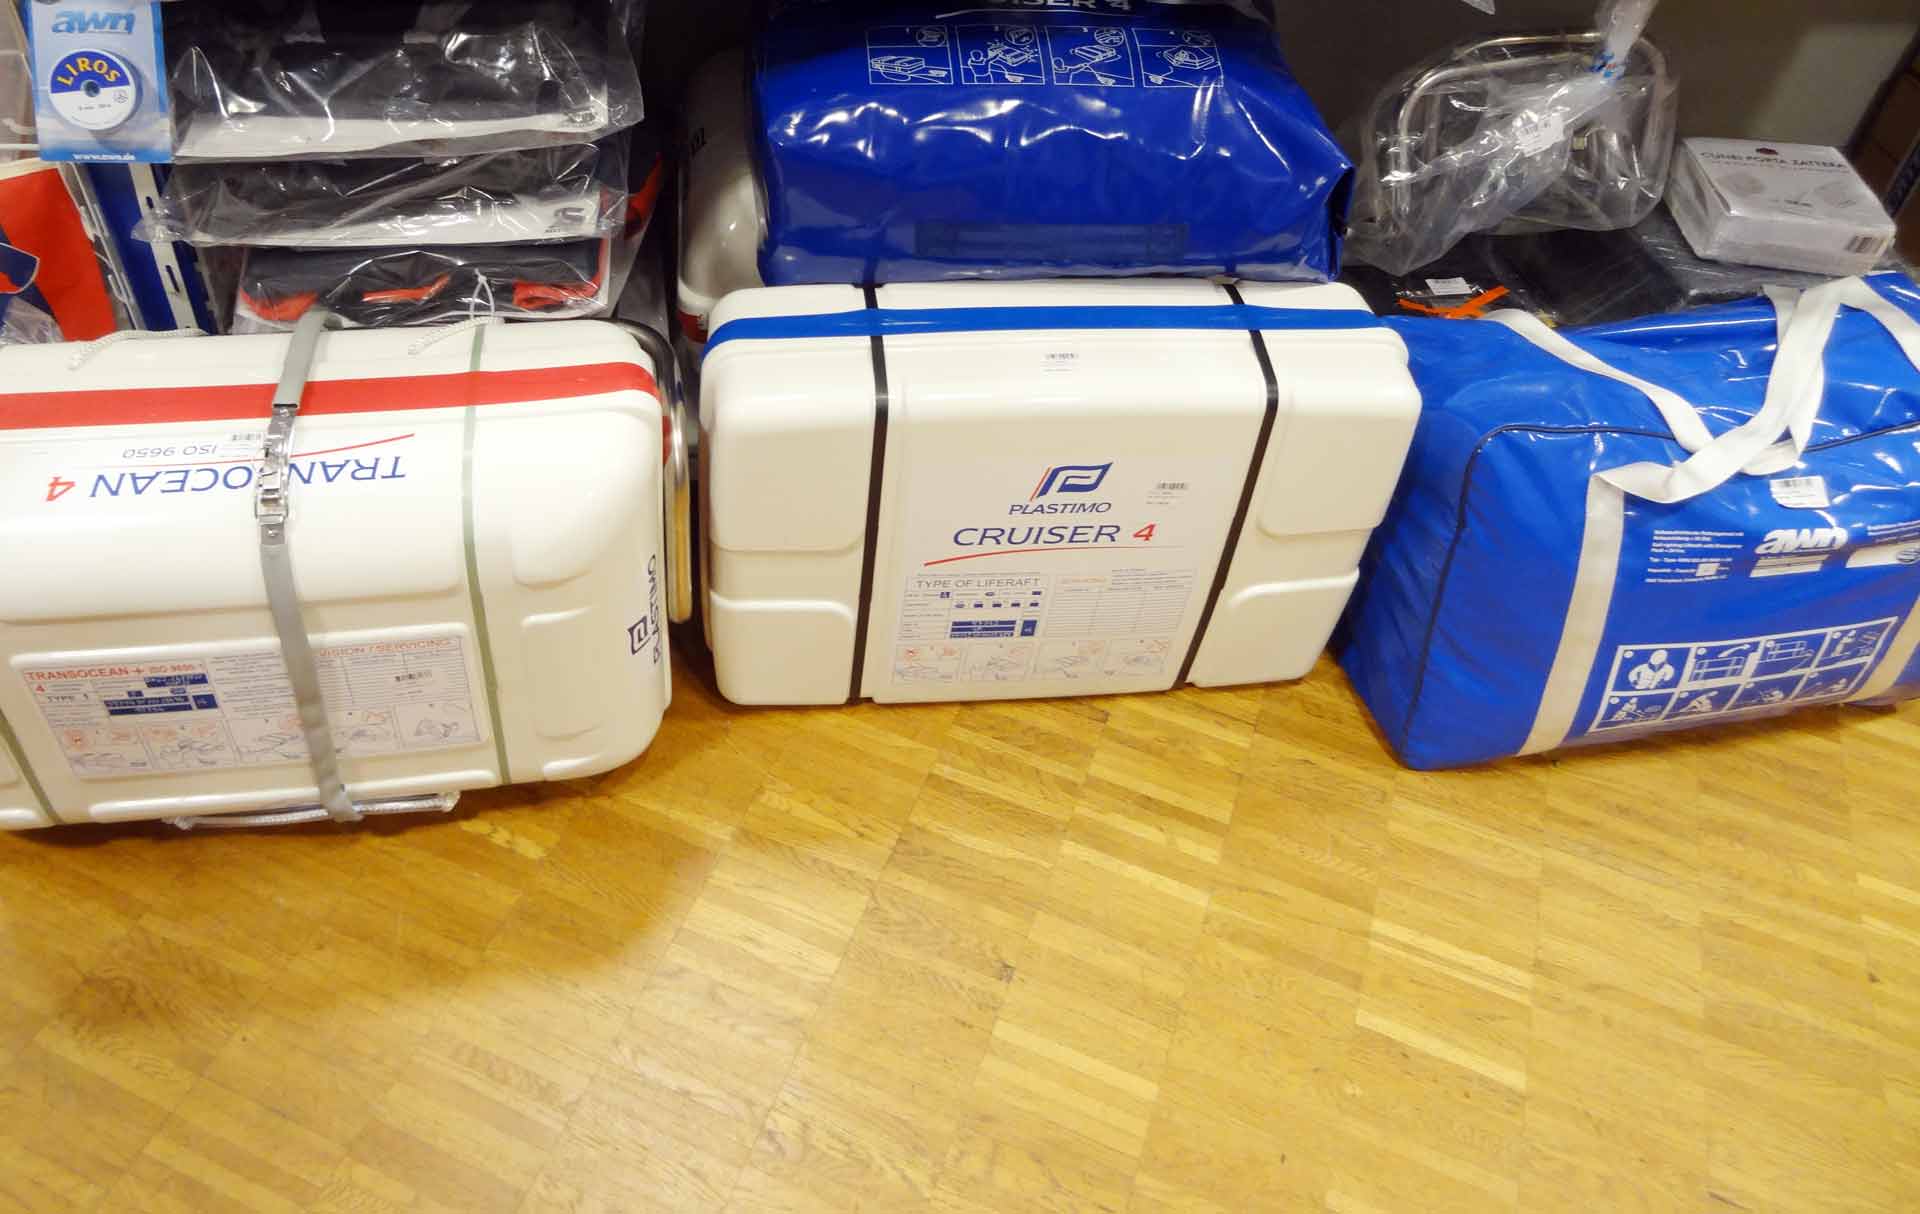 Life rafts: Solid boxes for storing outside or in lighter cases for storing under deck